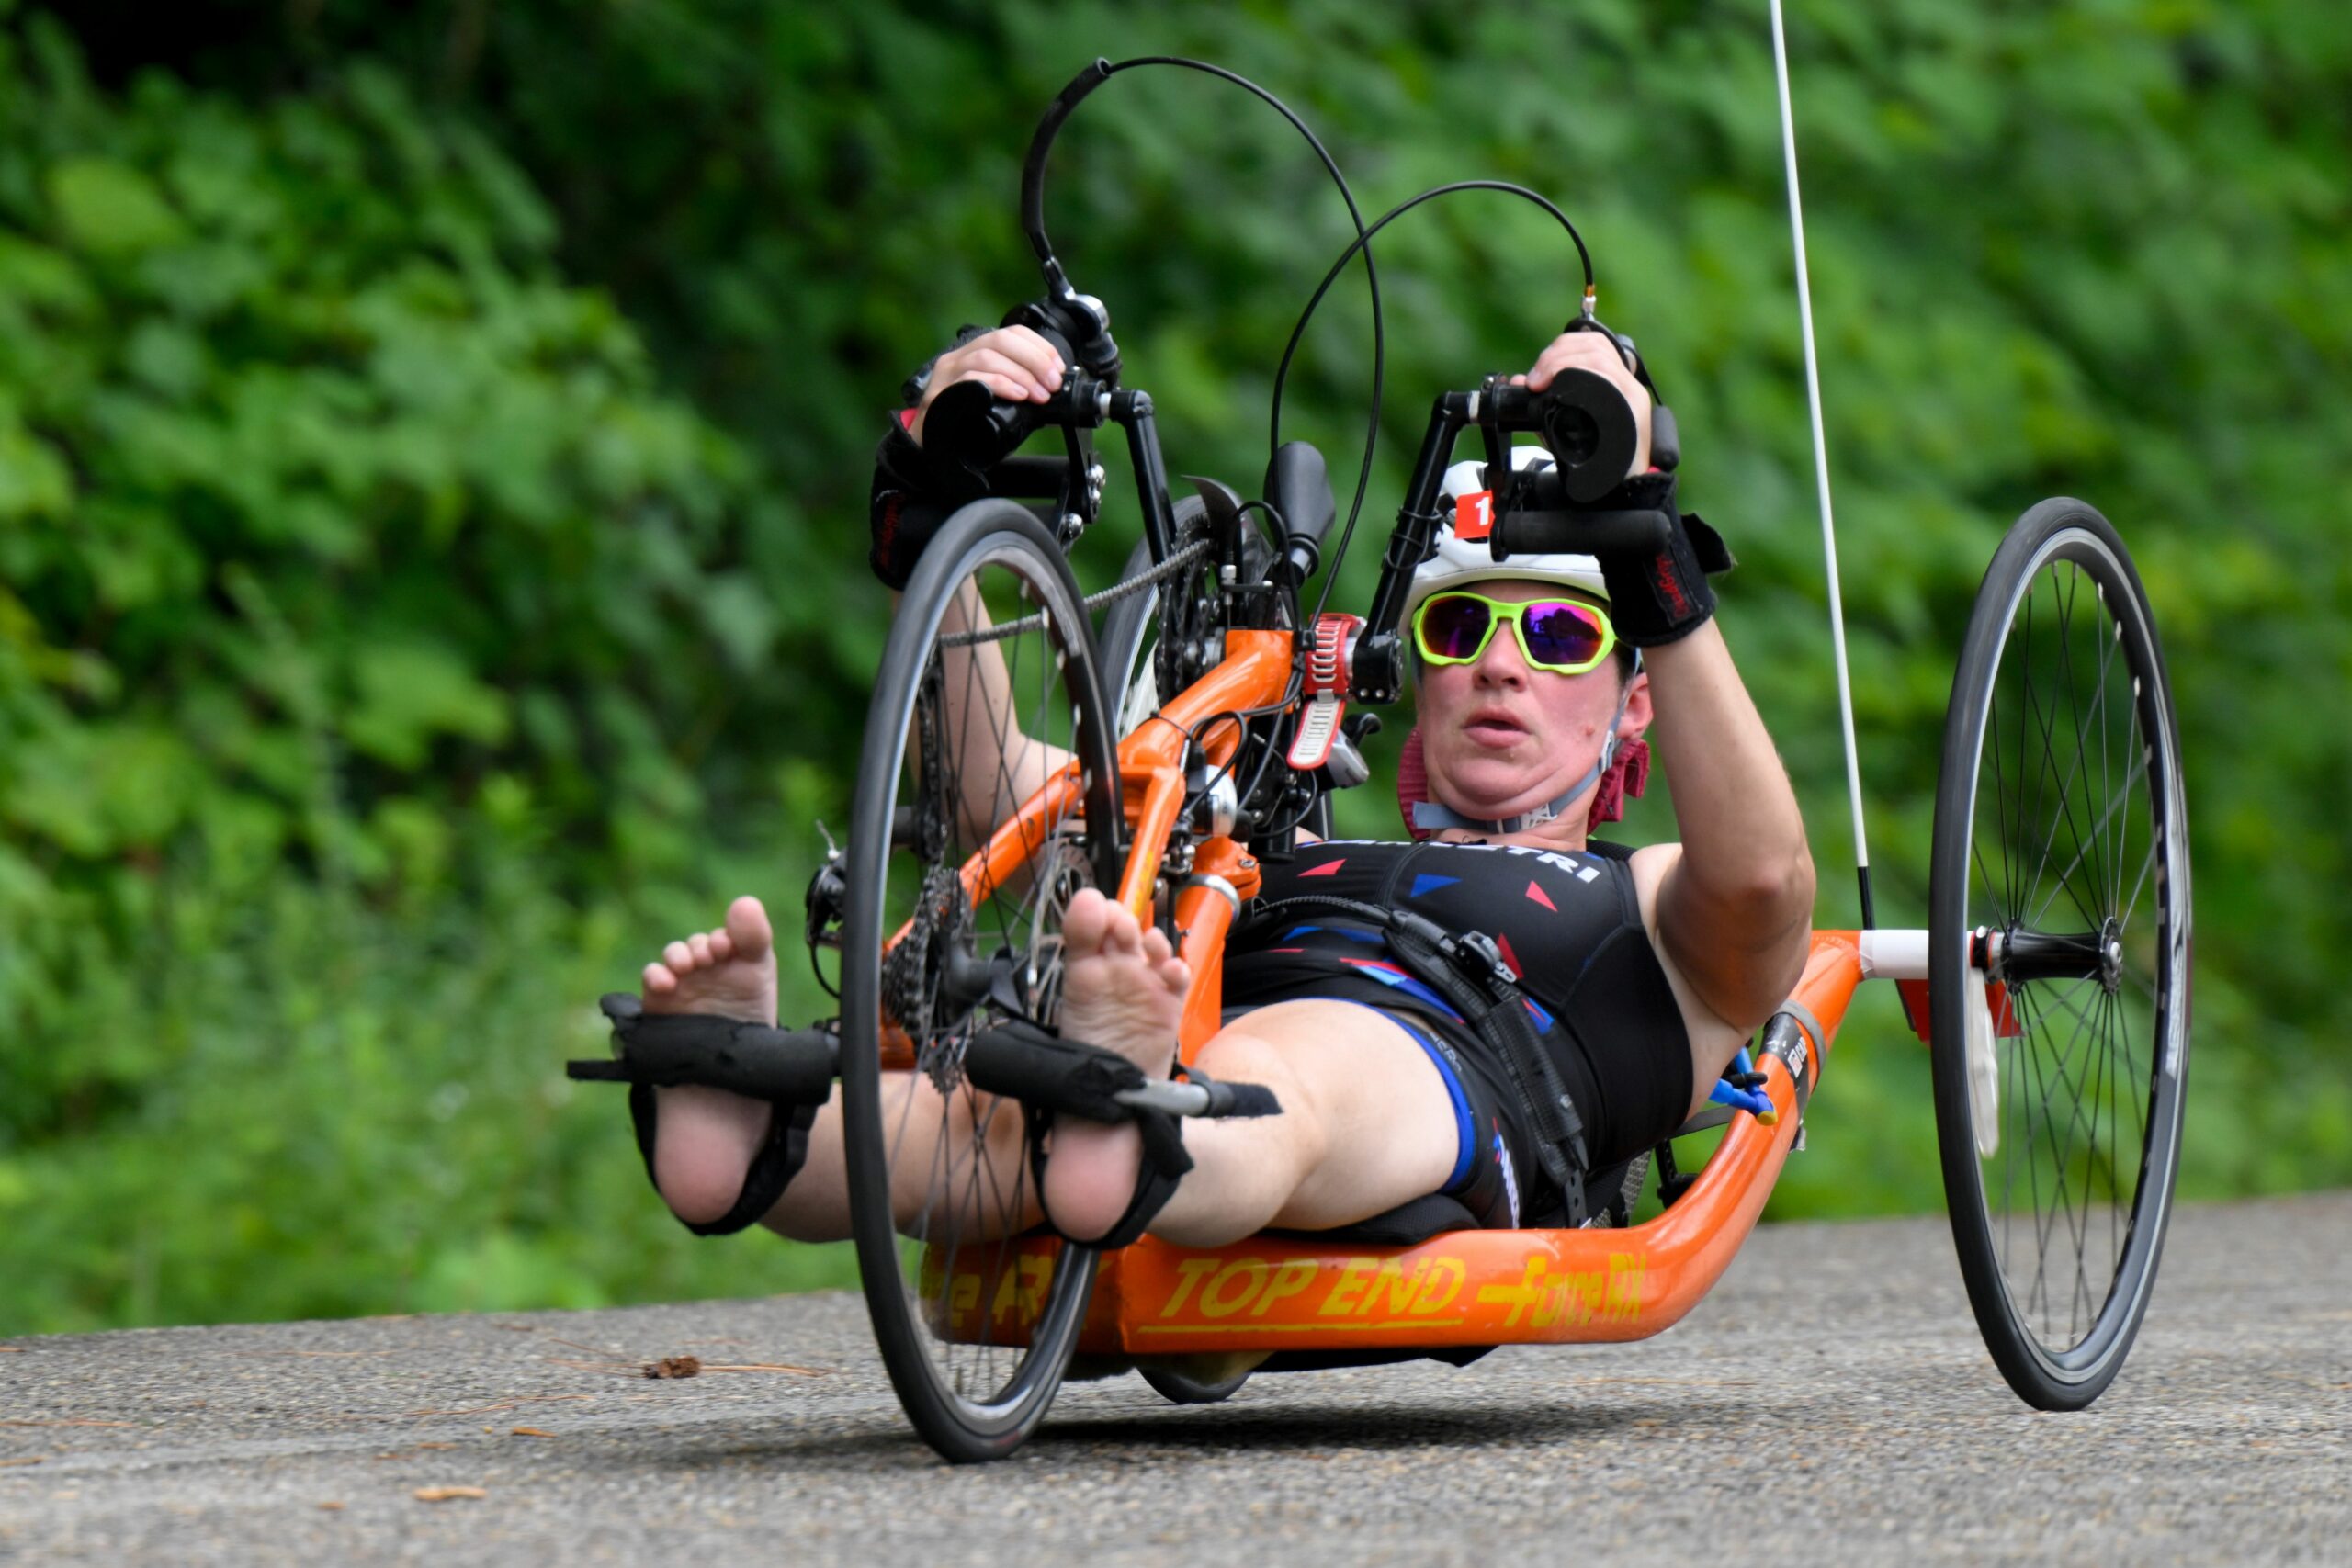 Athlete competing on orange handcycle